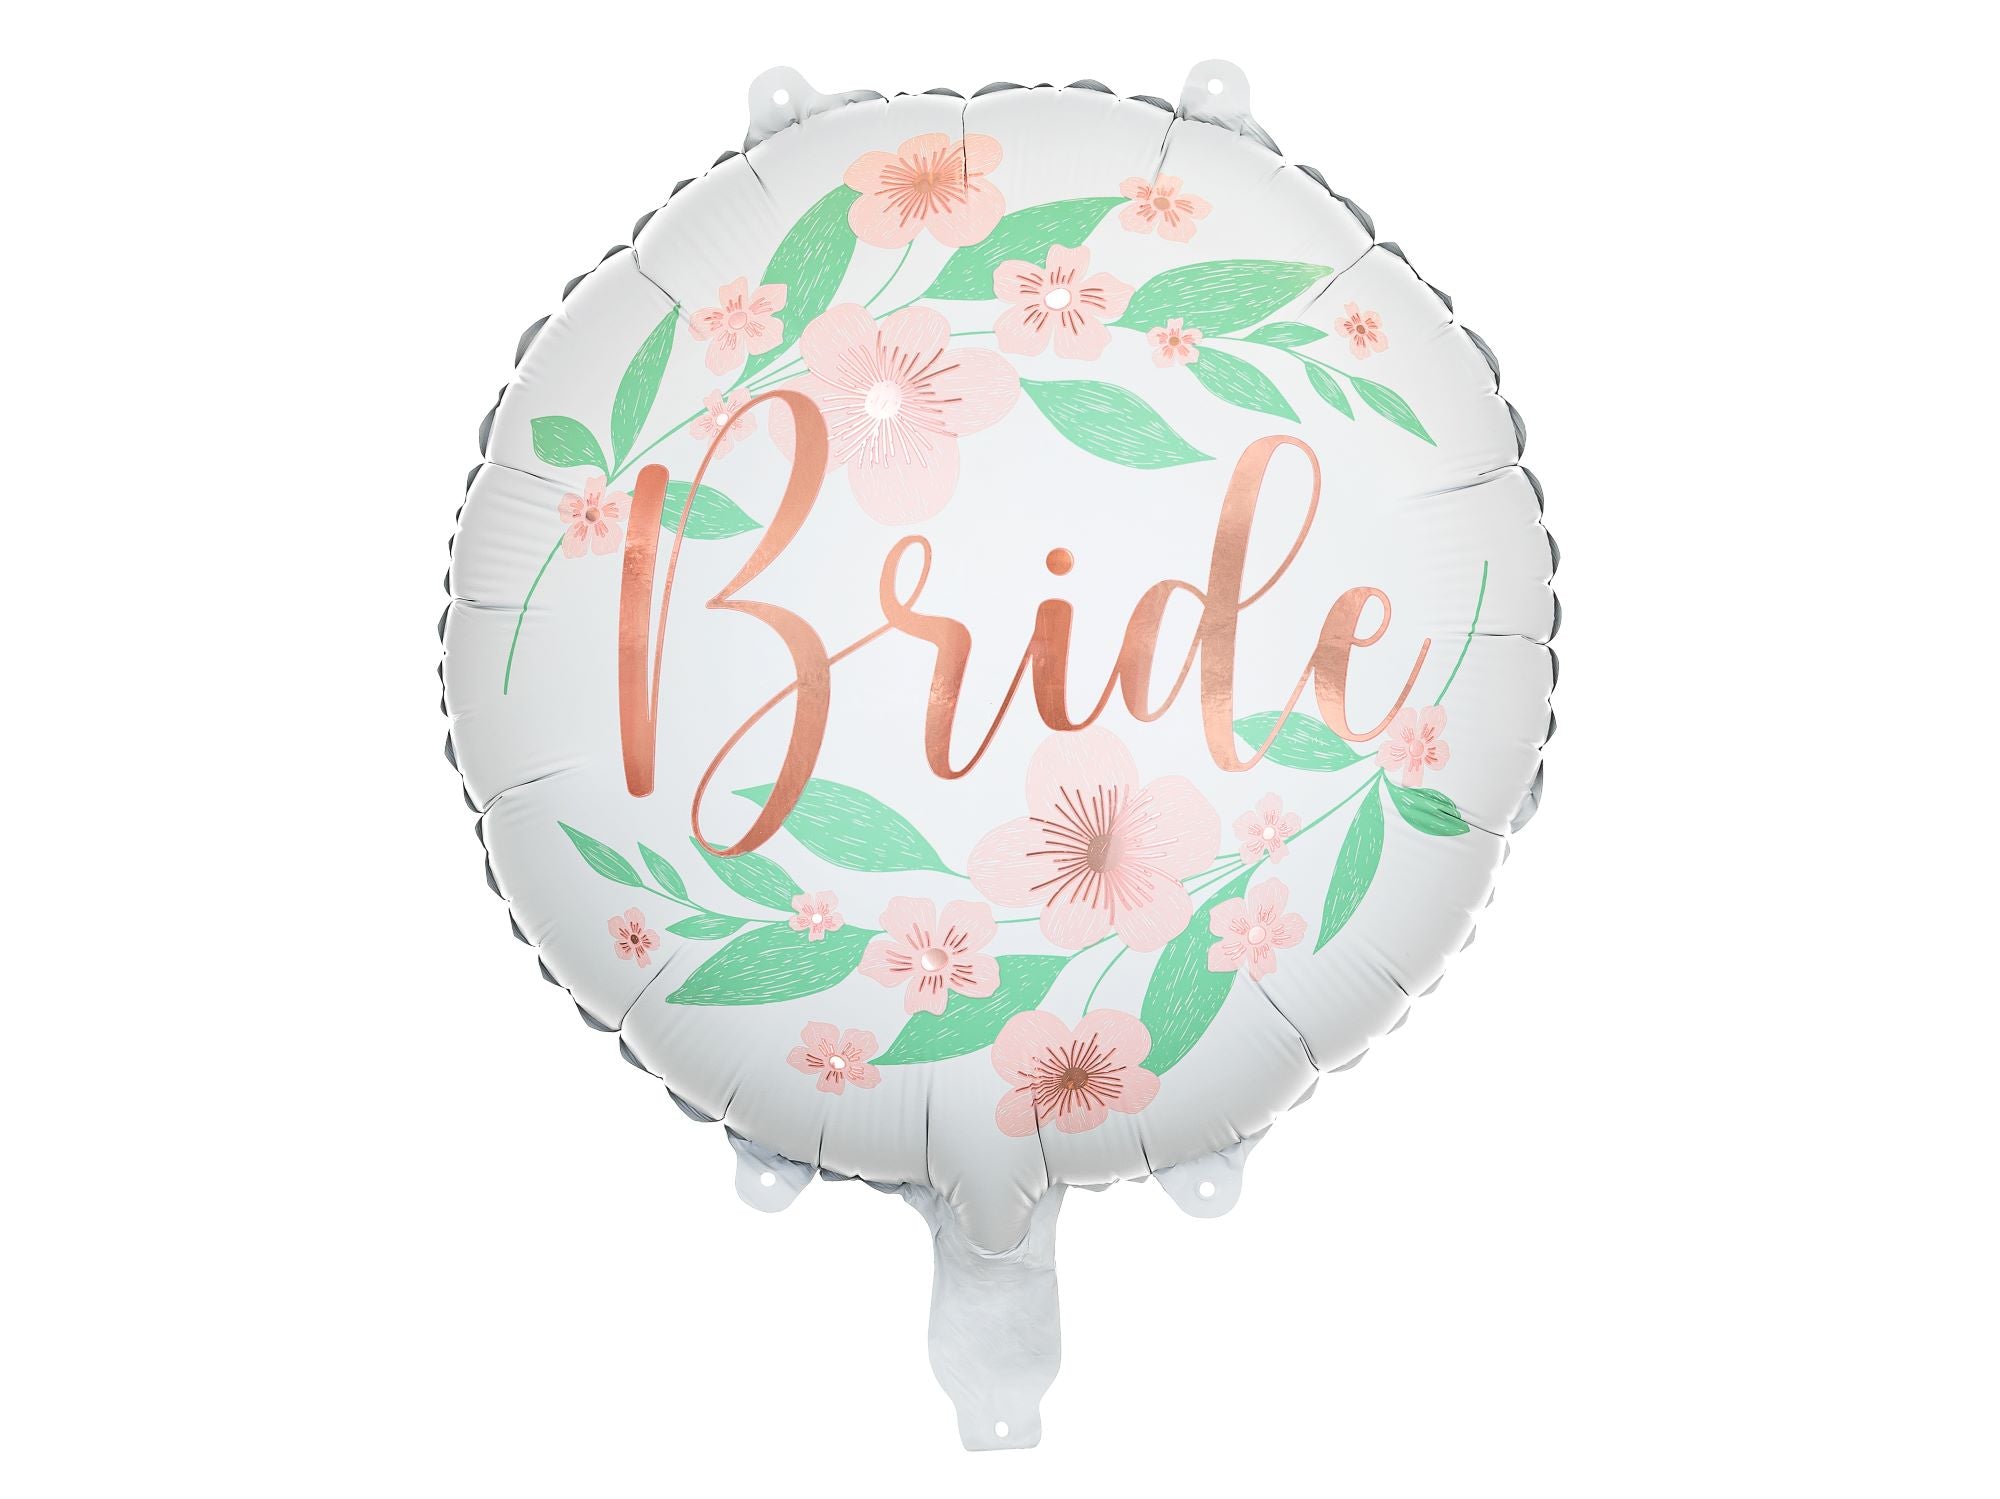 Flower Bride Foil Balloon